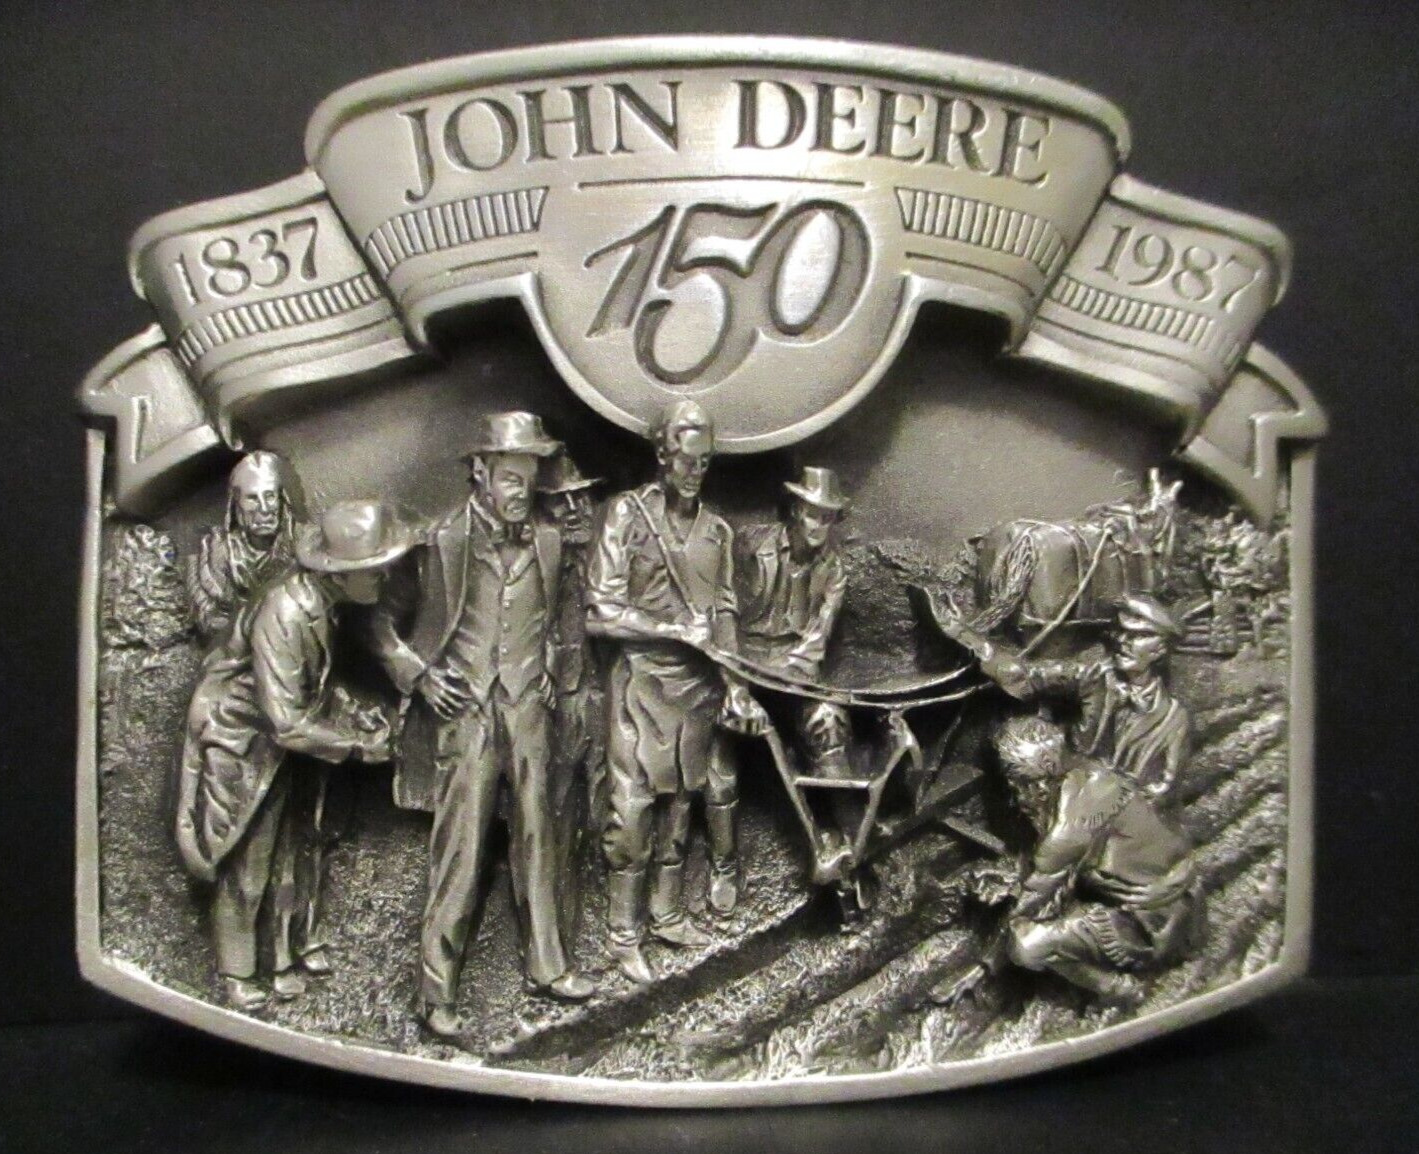 John Deere 150th Sesquicentennial 1937 One Bottom Steel Plow Demo Event 1987 LE